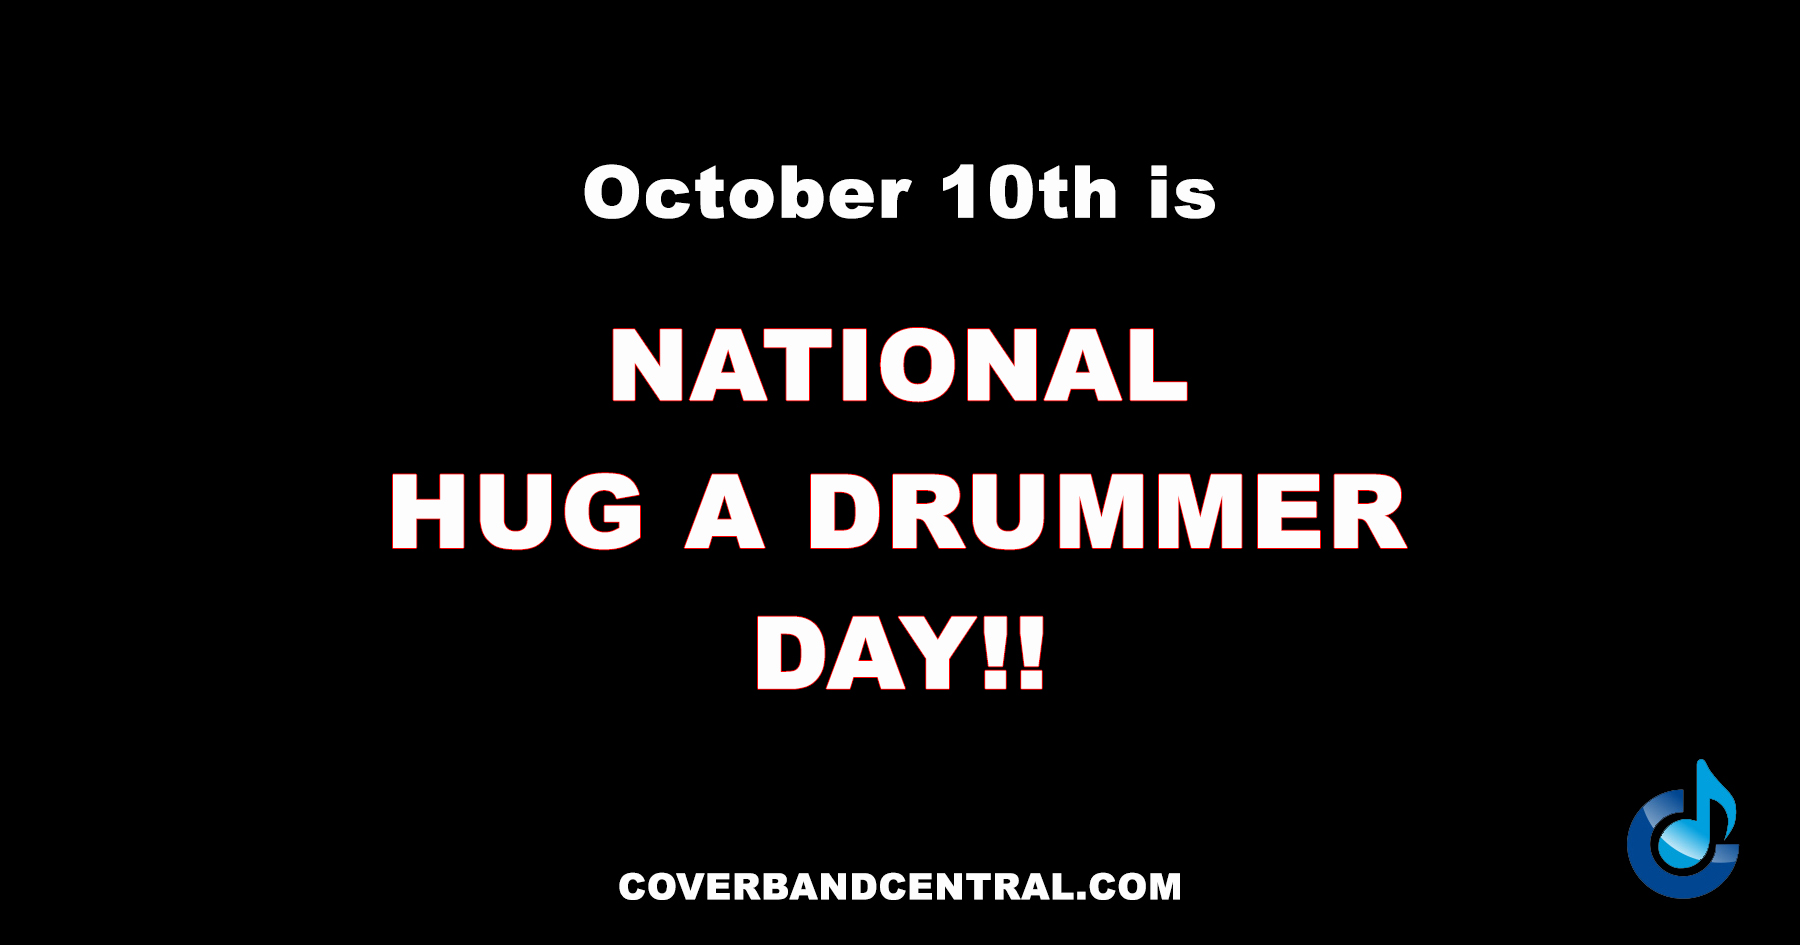 Hug a drummer day